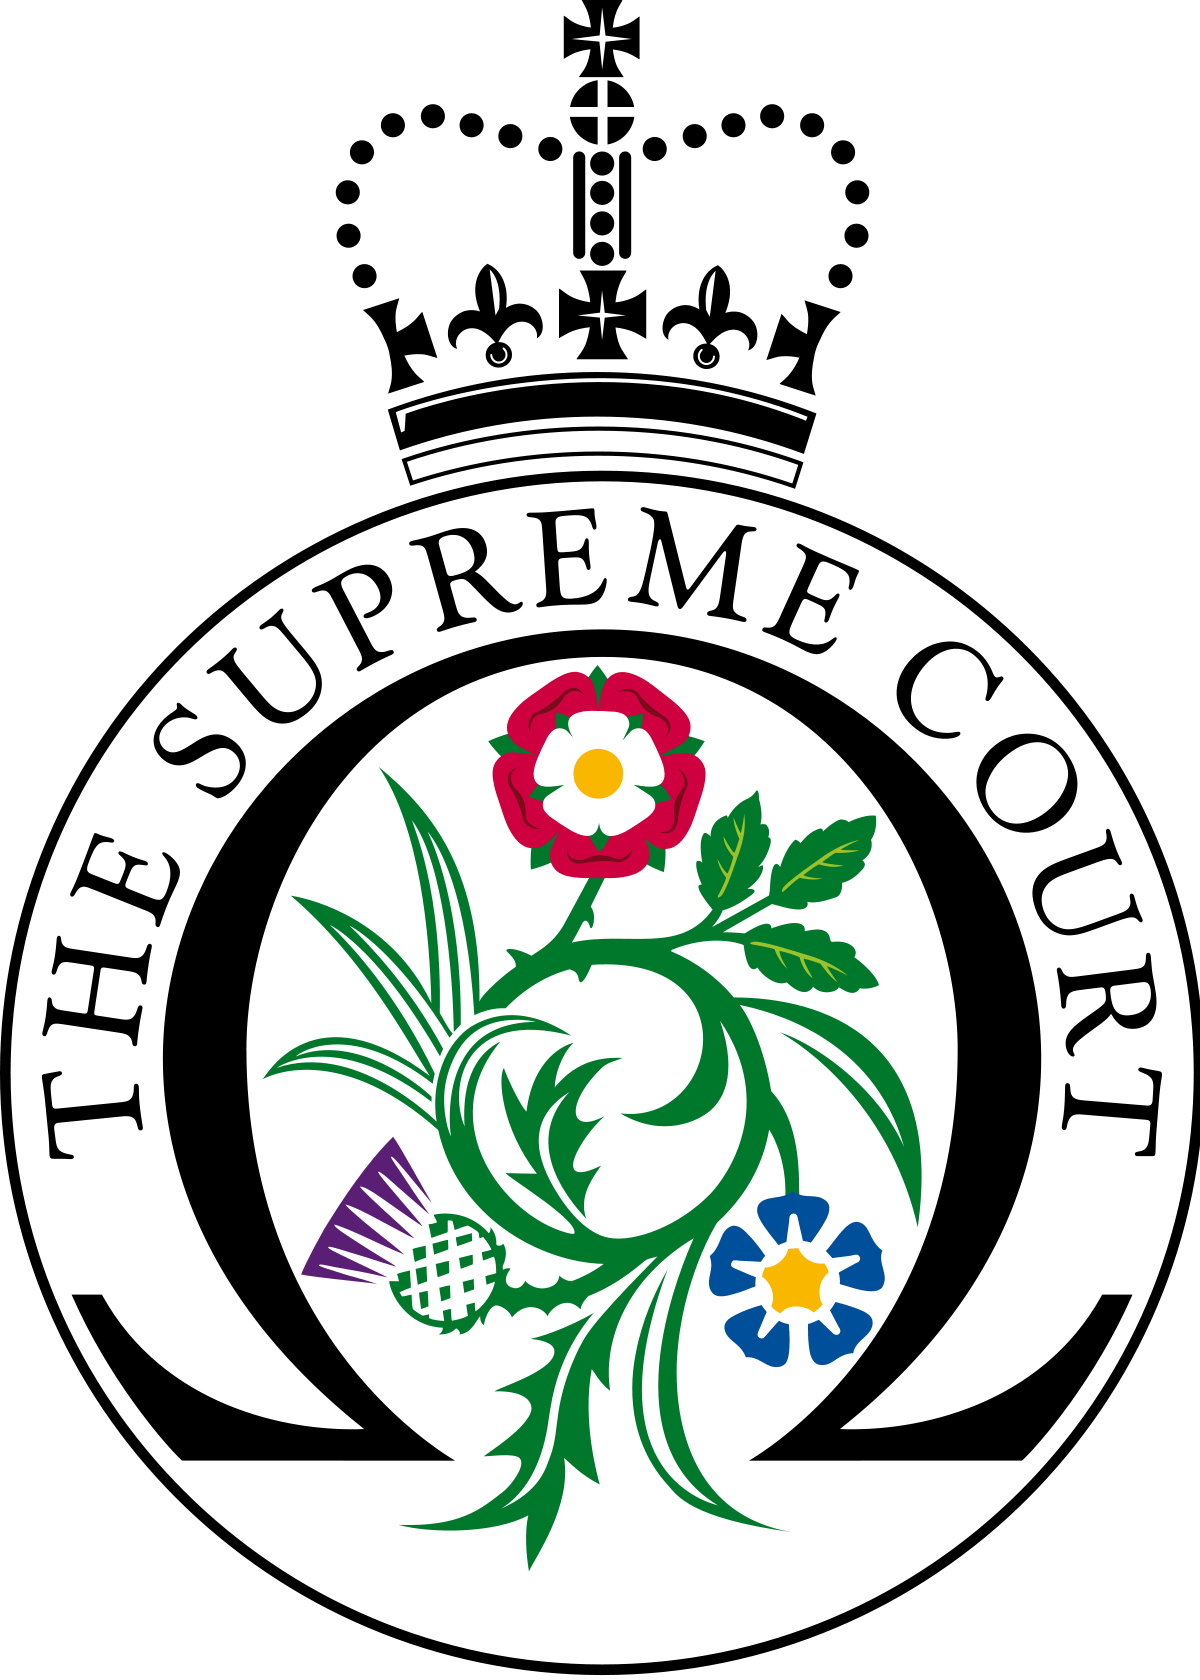 Supremem Court Justice Logo - The Supreme Court